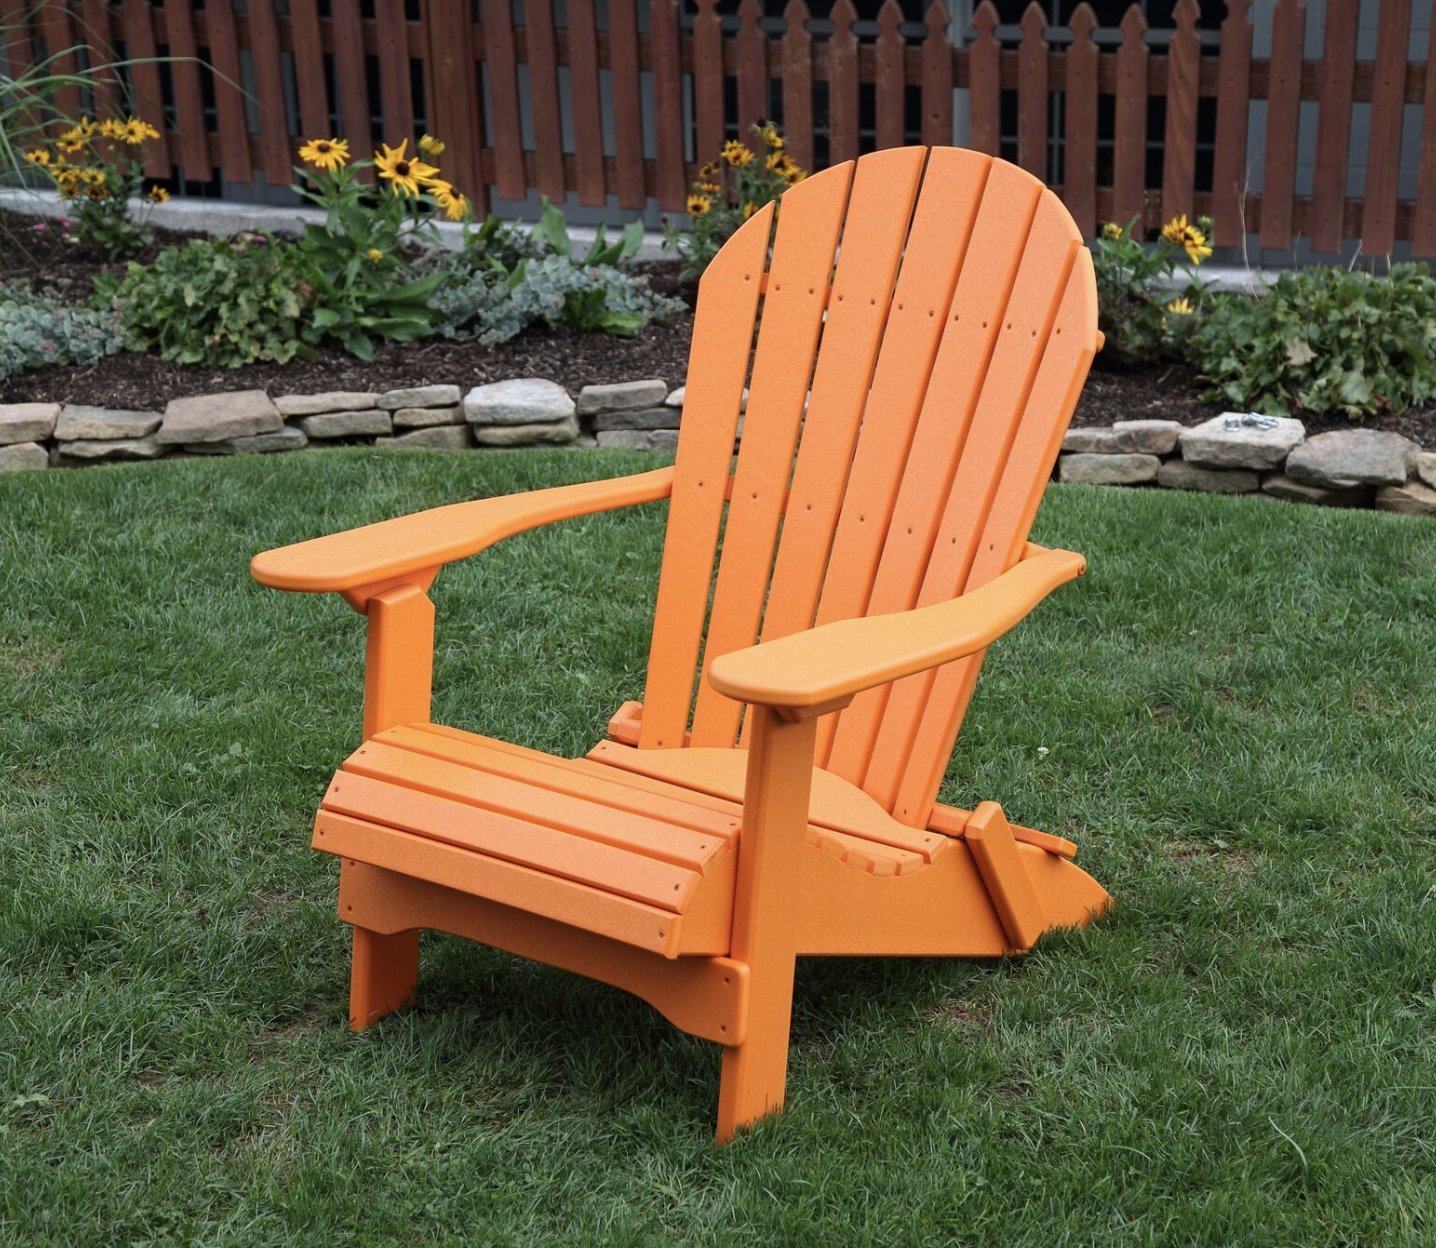 8 Best Plastic Adirondack Chairs (2020)